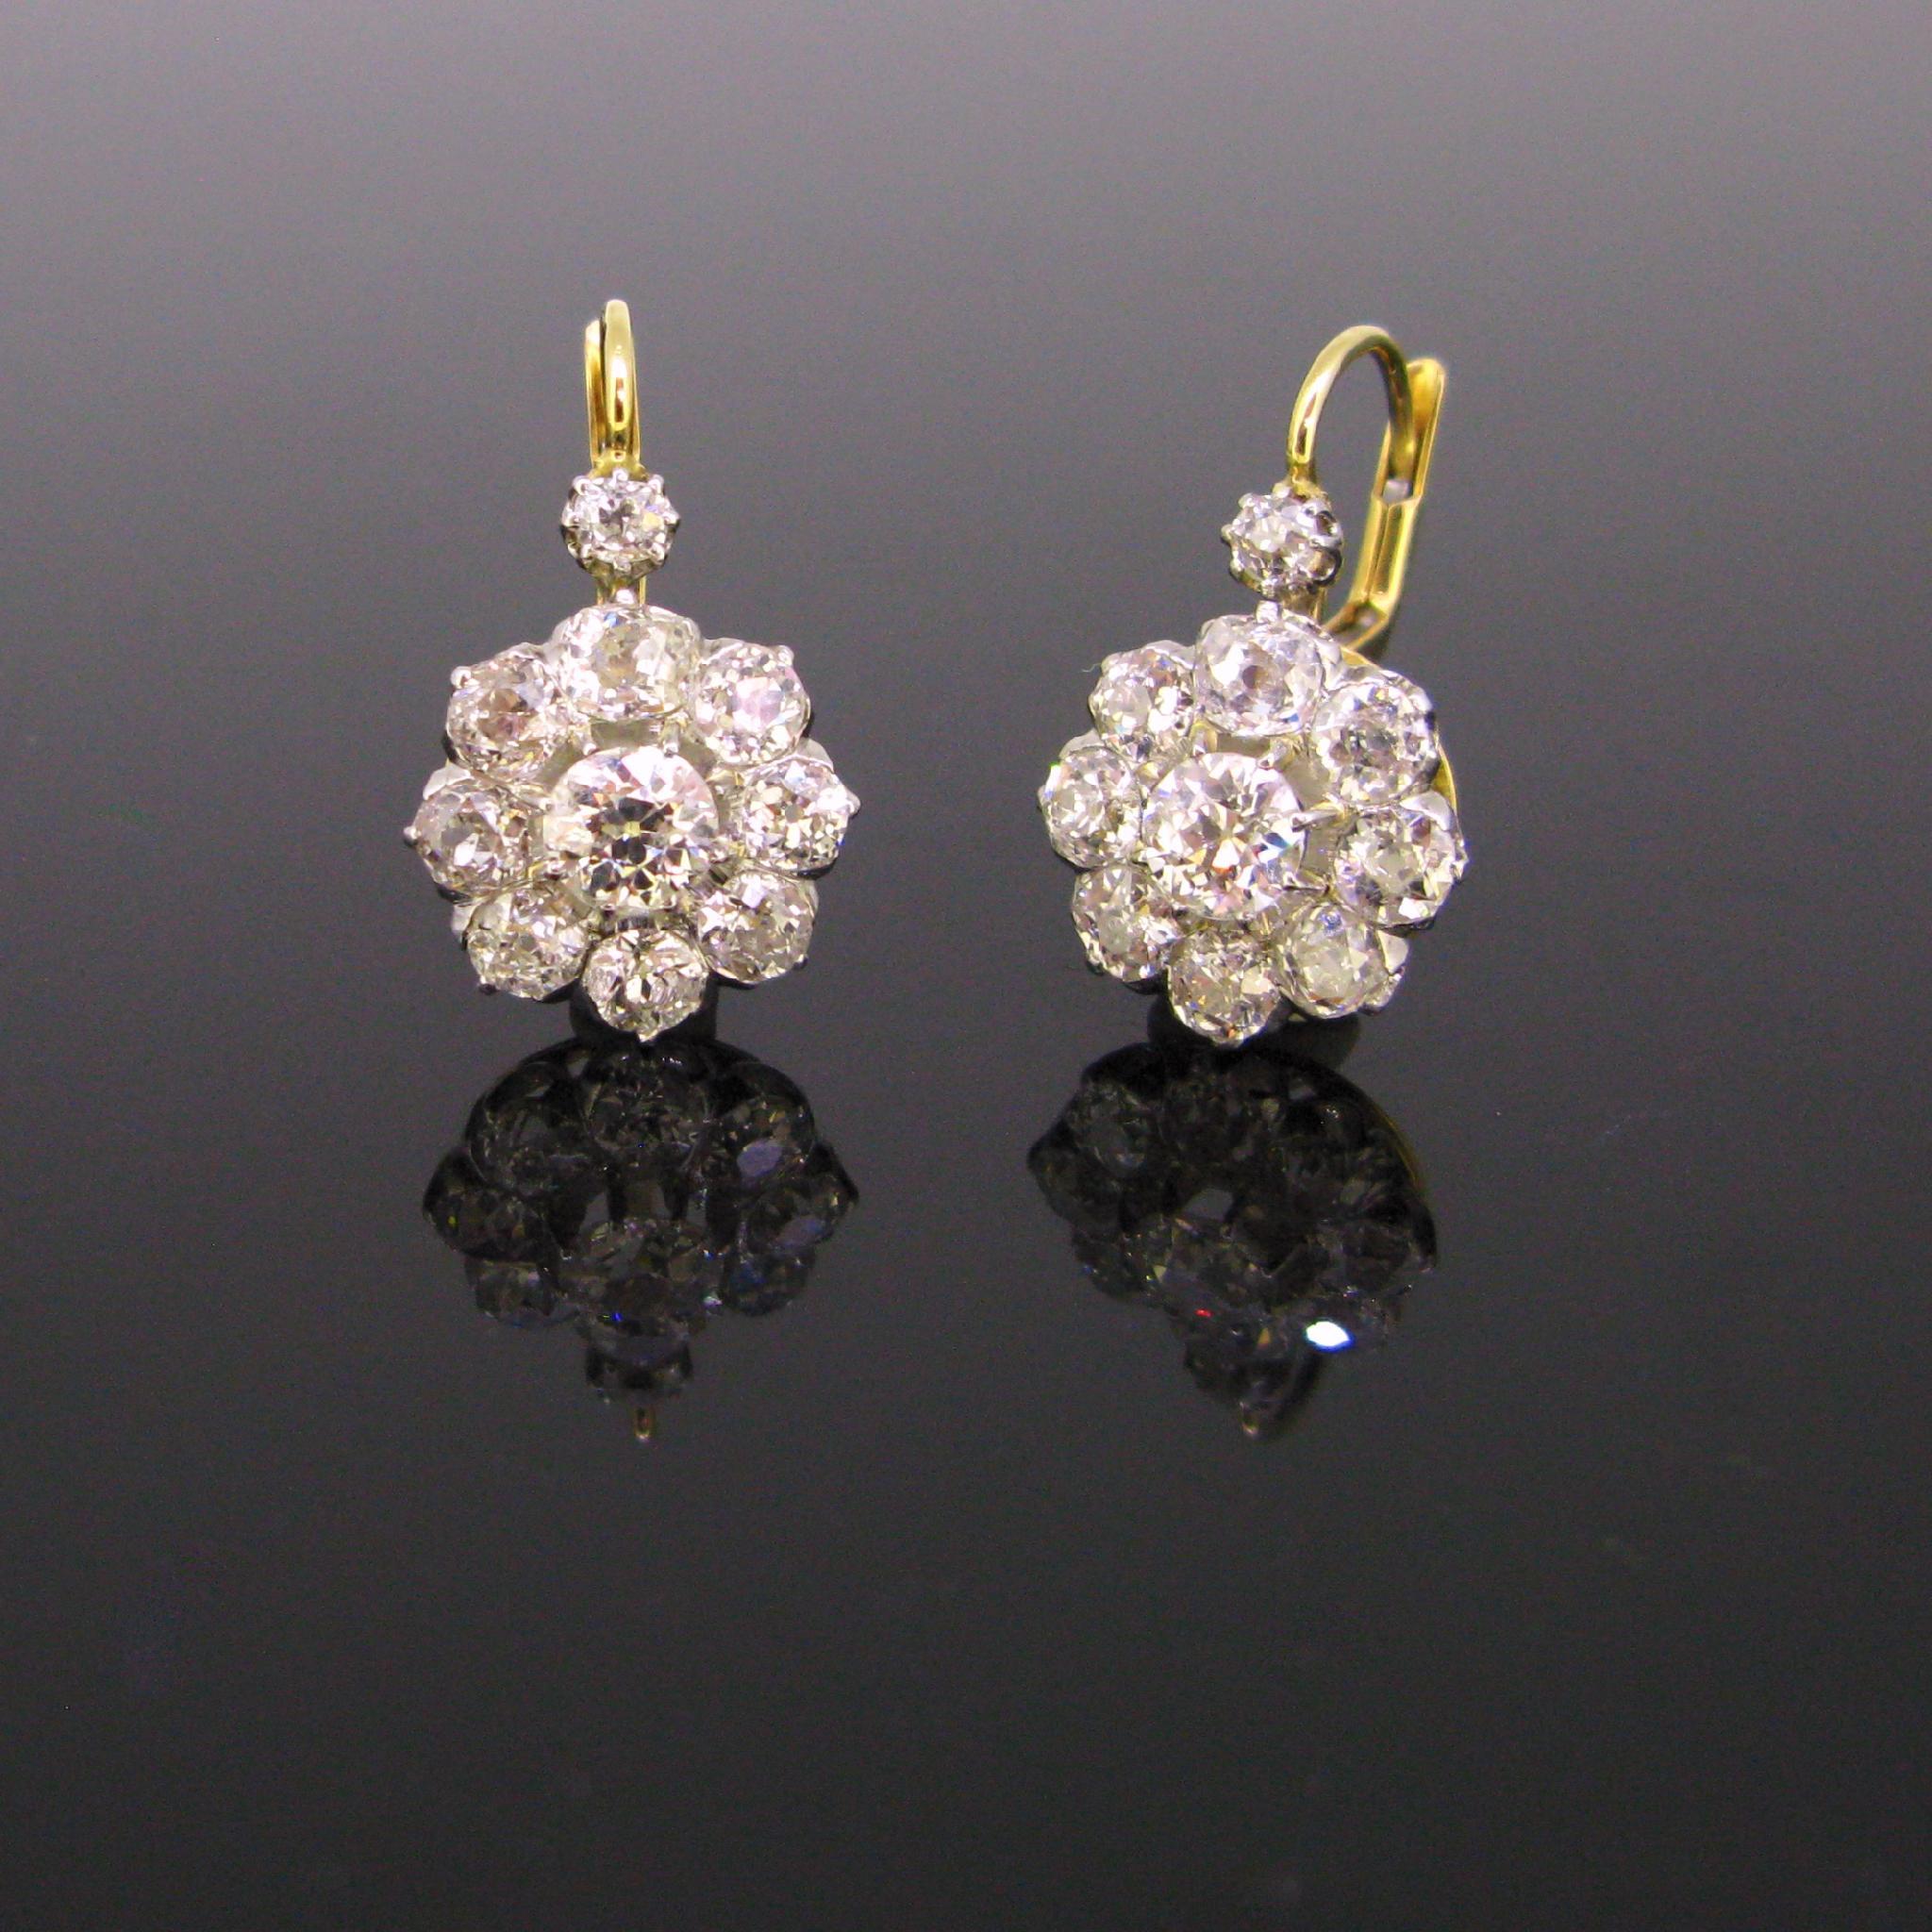 Antique Belle Époque Diamonds Dormeuses Earrings in Box, 18kt Gold and Platinum 1